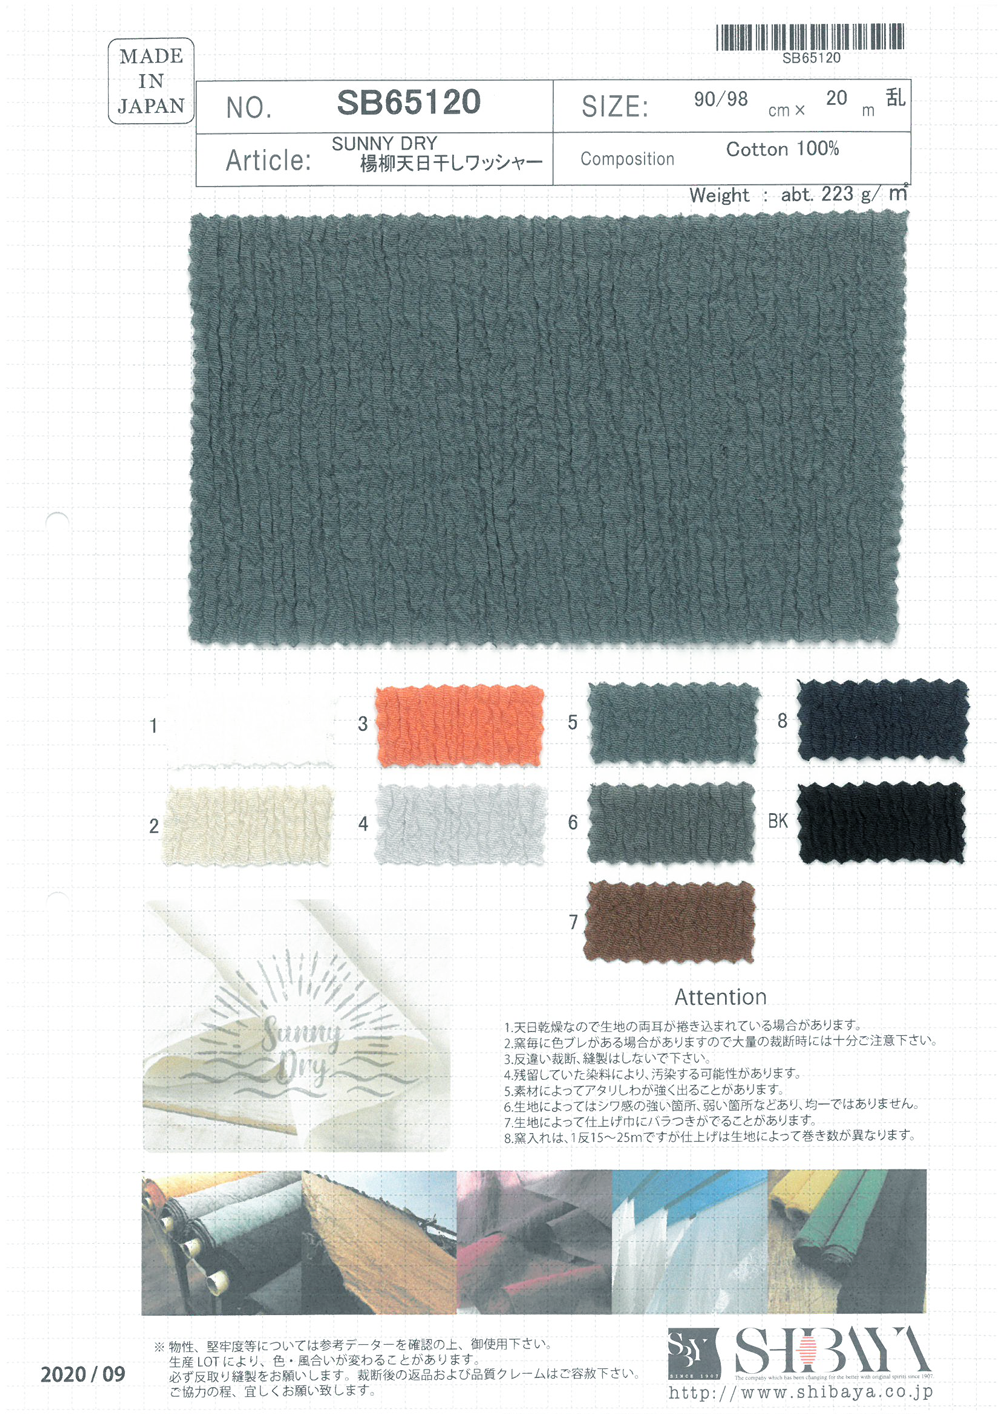 SB65120 SUNNY DRY Yoryu (Wrinkle Crepe) Sun-dried Washer Processing[Textile / Fabric] SHIBAYA